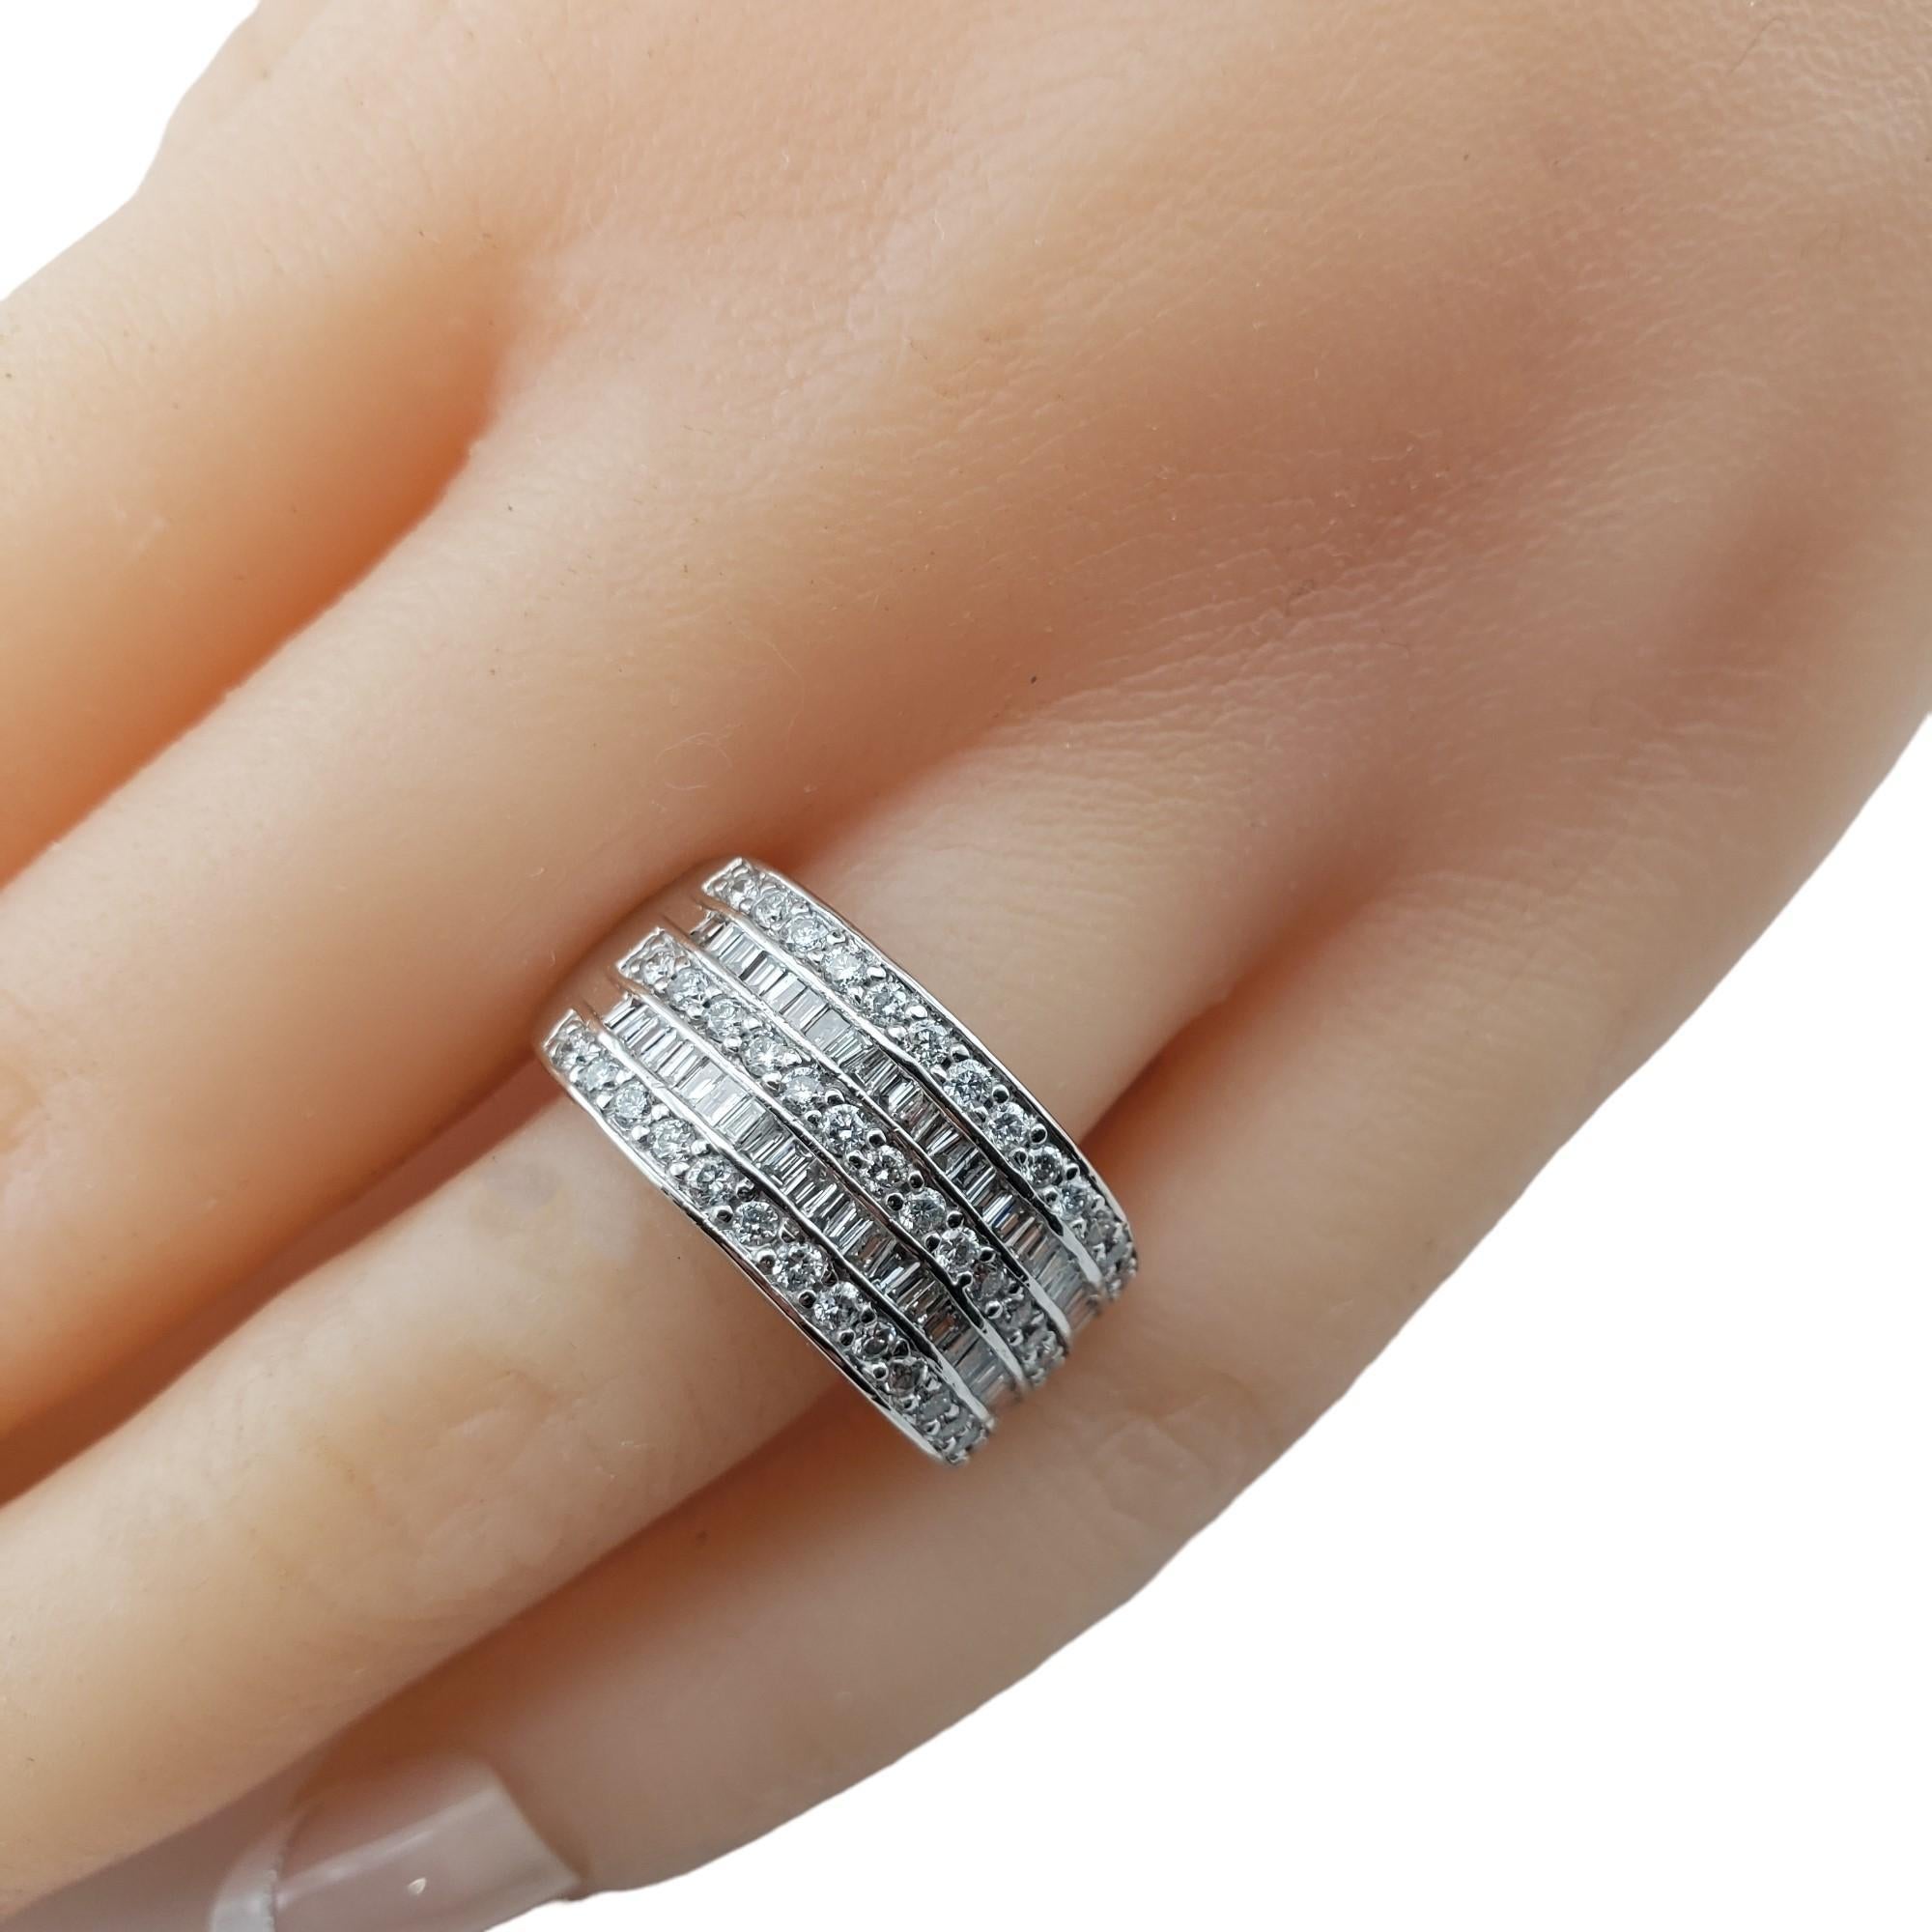  14K White Gold Diamond Ring Size 7 #15375 For Sale 4